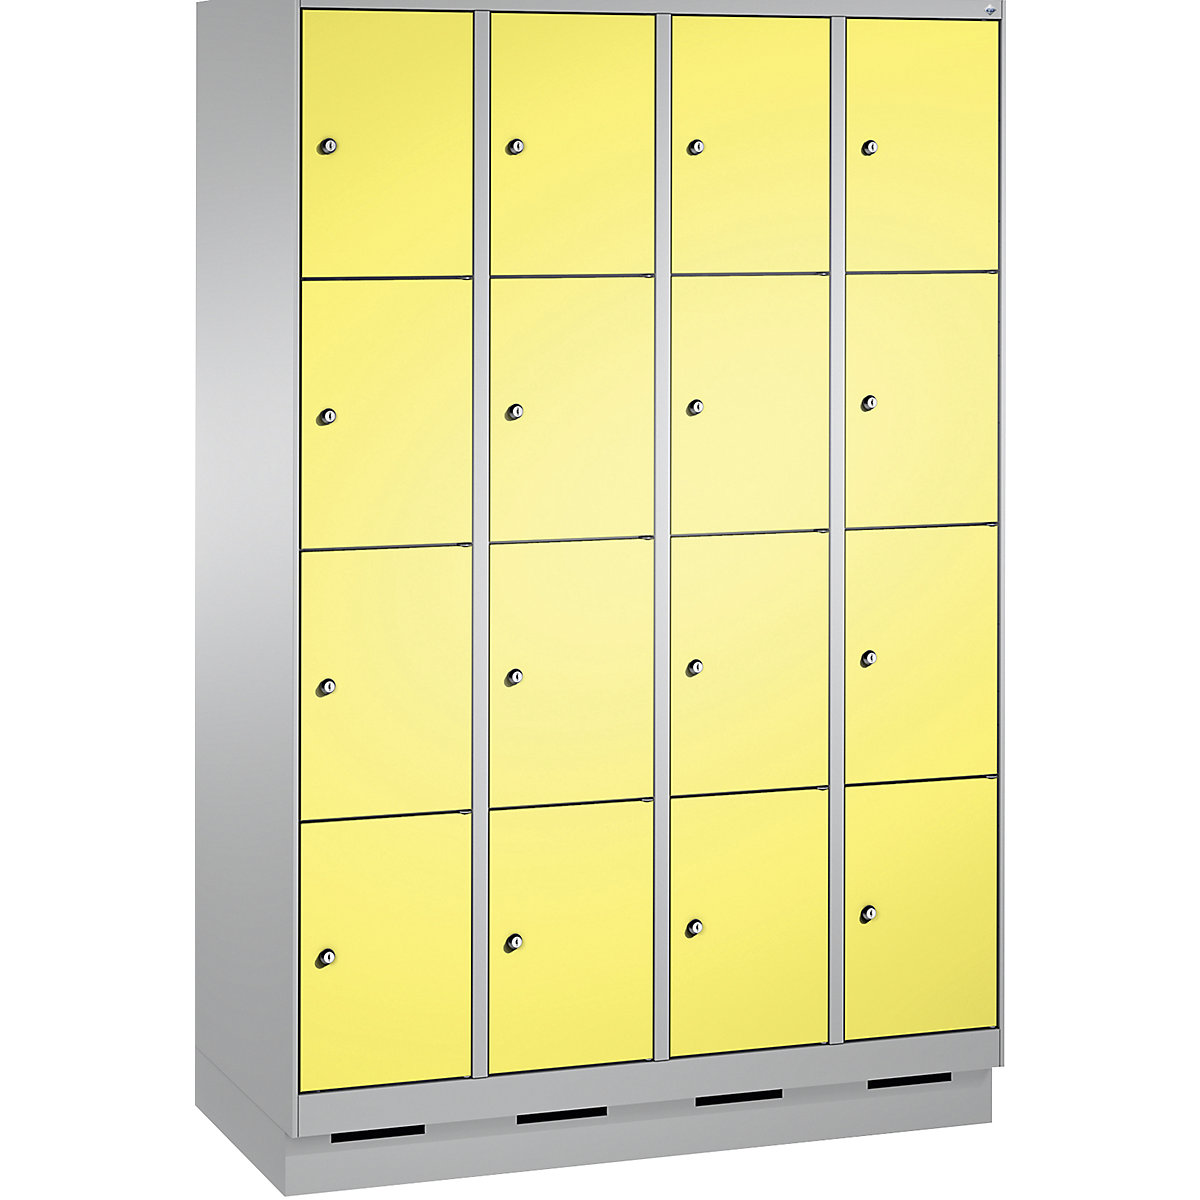 Armário de cacifos EVOLO, com rodapé – C+P, 4 compartimentos, 4 cacifos cada, largura do compartimento 300 mm, cinza alumínio / amarelo enxofre-4